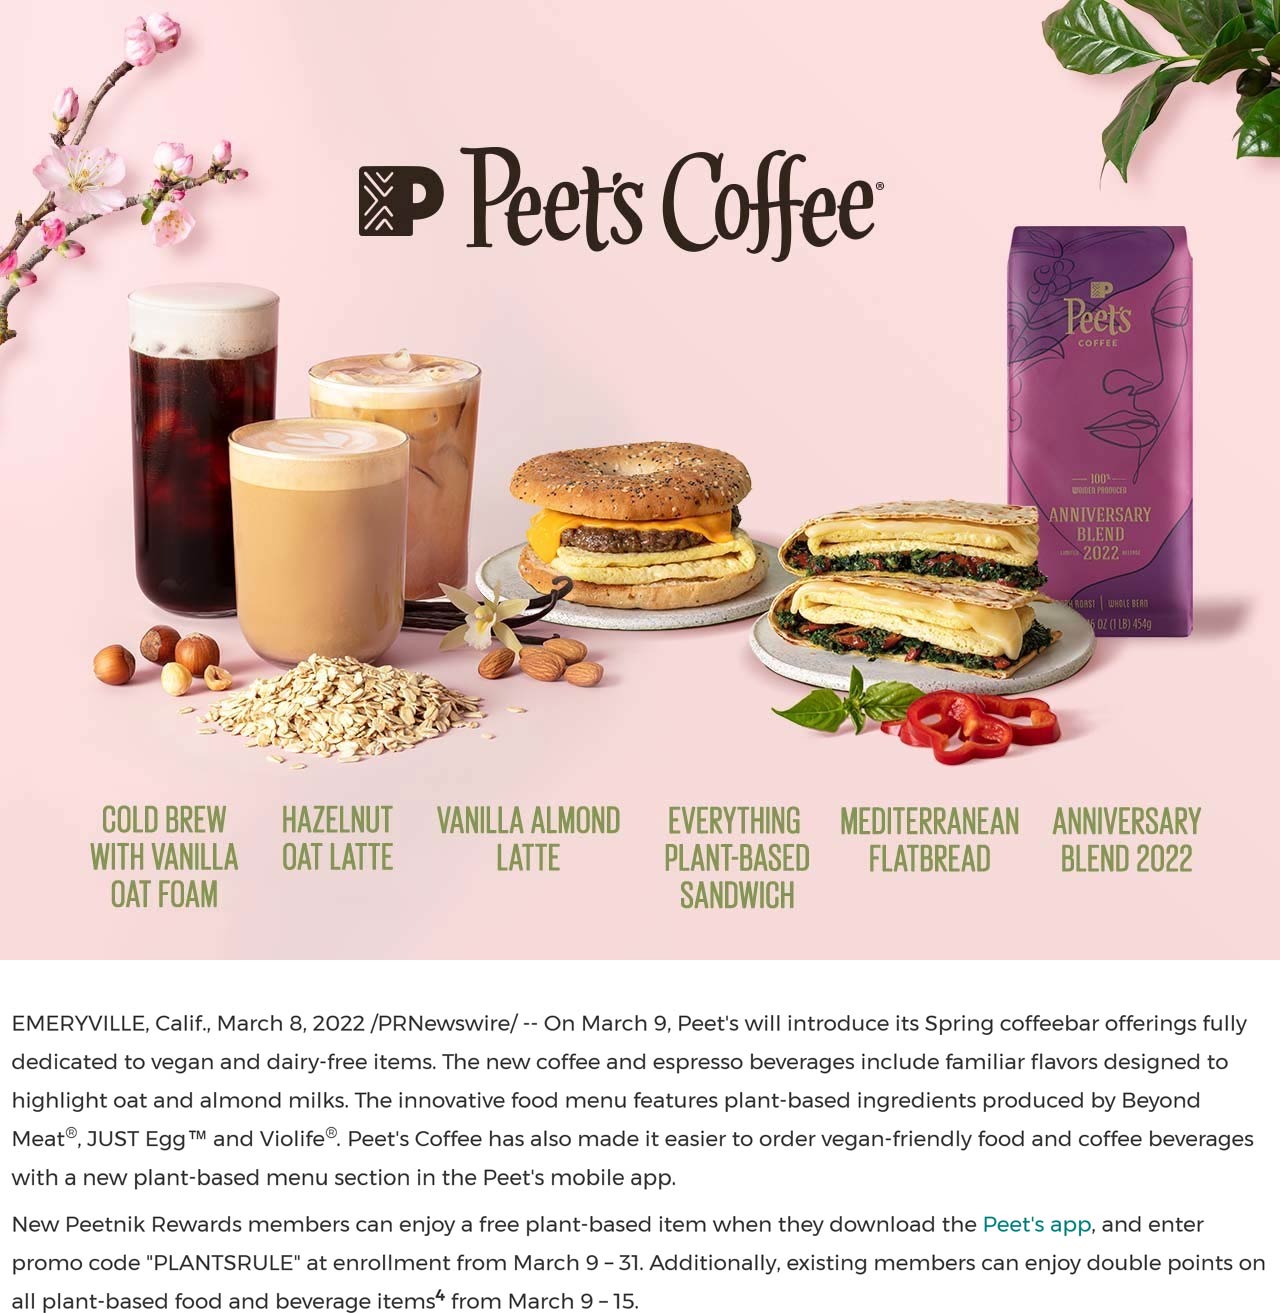 Peets Coffee restaurants Coupon  Free plant-based item via mobile at Peets Coffee and promo code PLANTSRULE #peetscoffee 